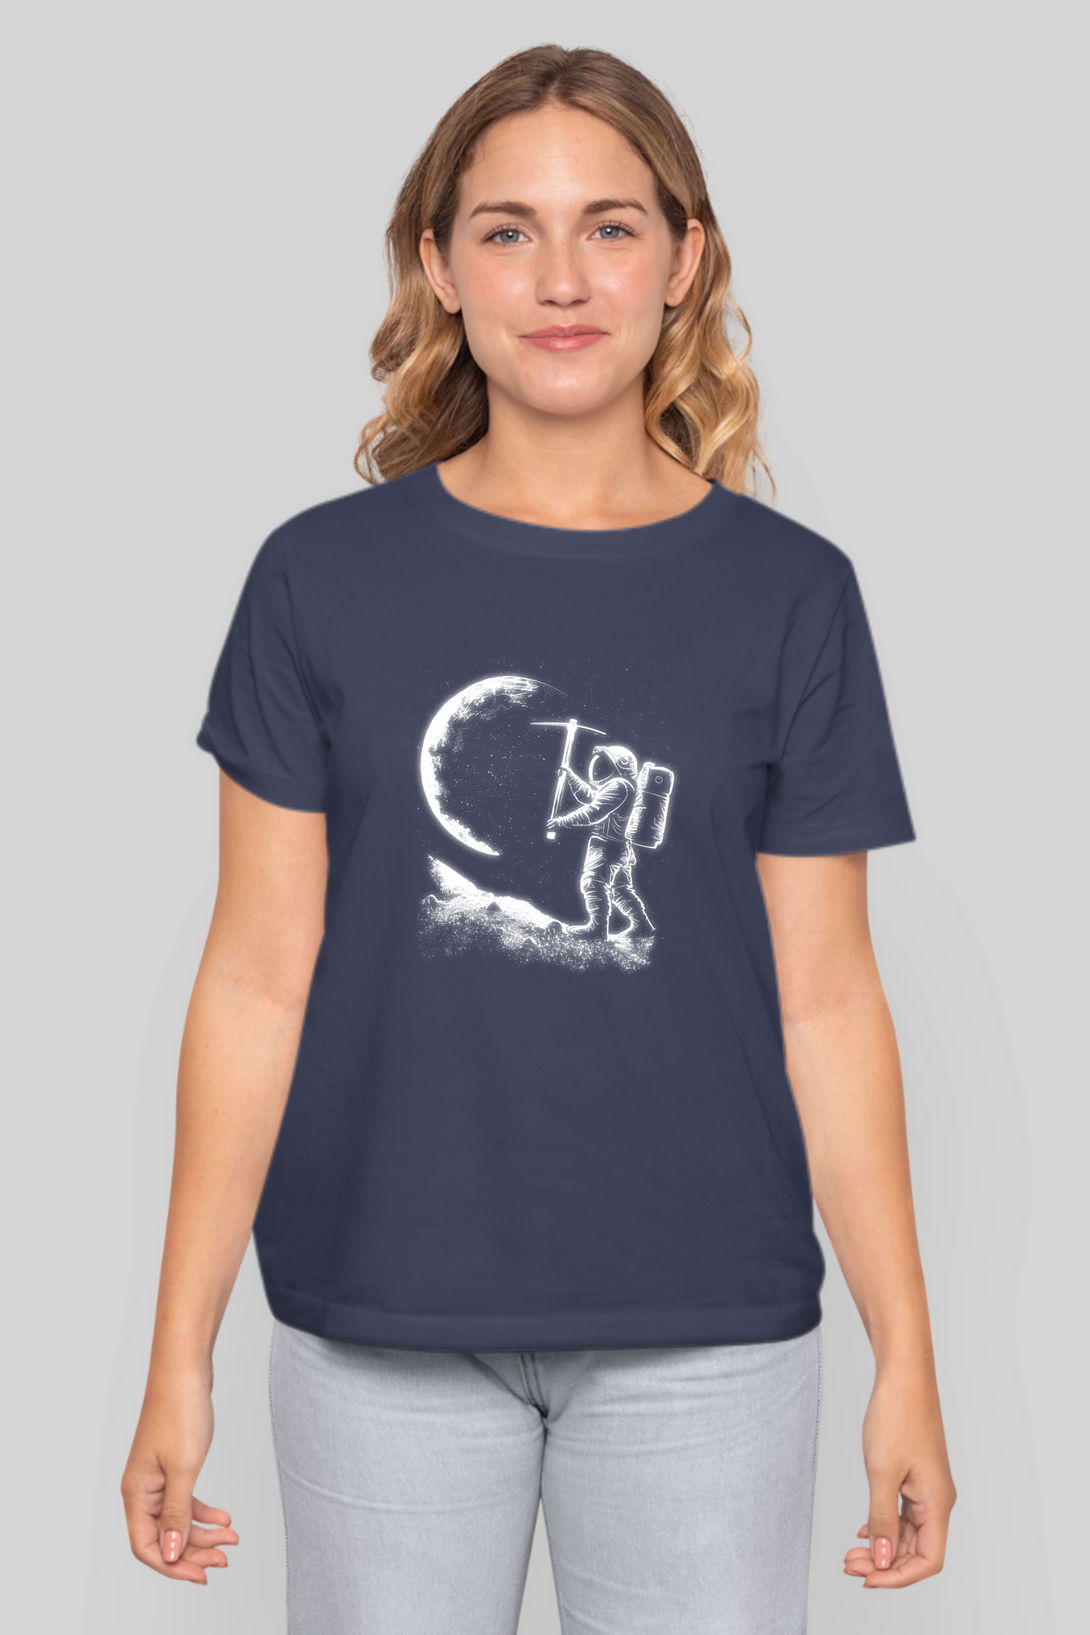 Astro-Lunar Printed T-Shirt For Women - WowWaves - 7